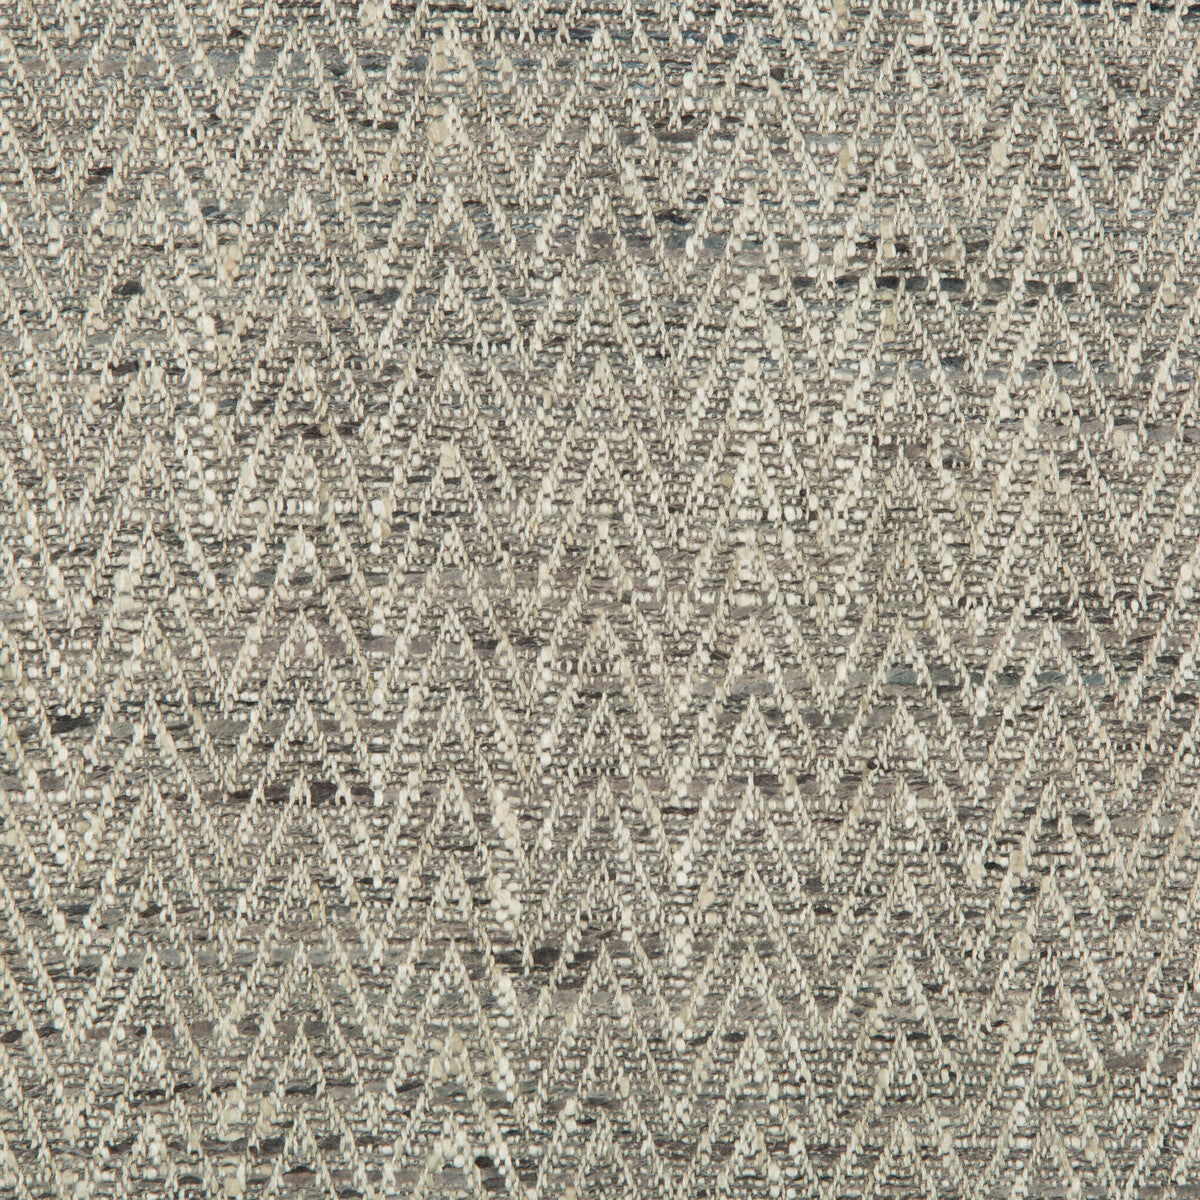 Kravet Smart fabric in 34092-21 color - pattern 34092.21.0 - by Kravet Smart